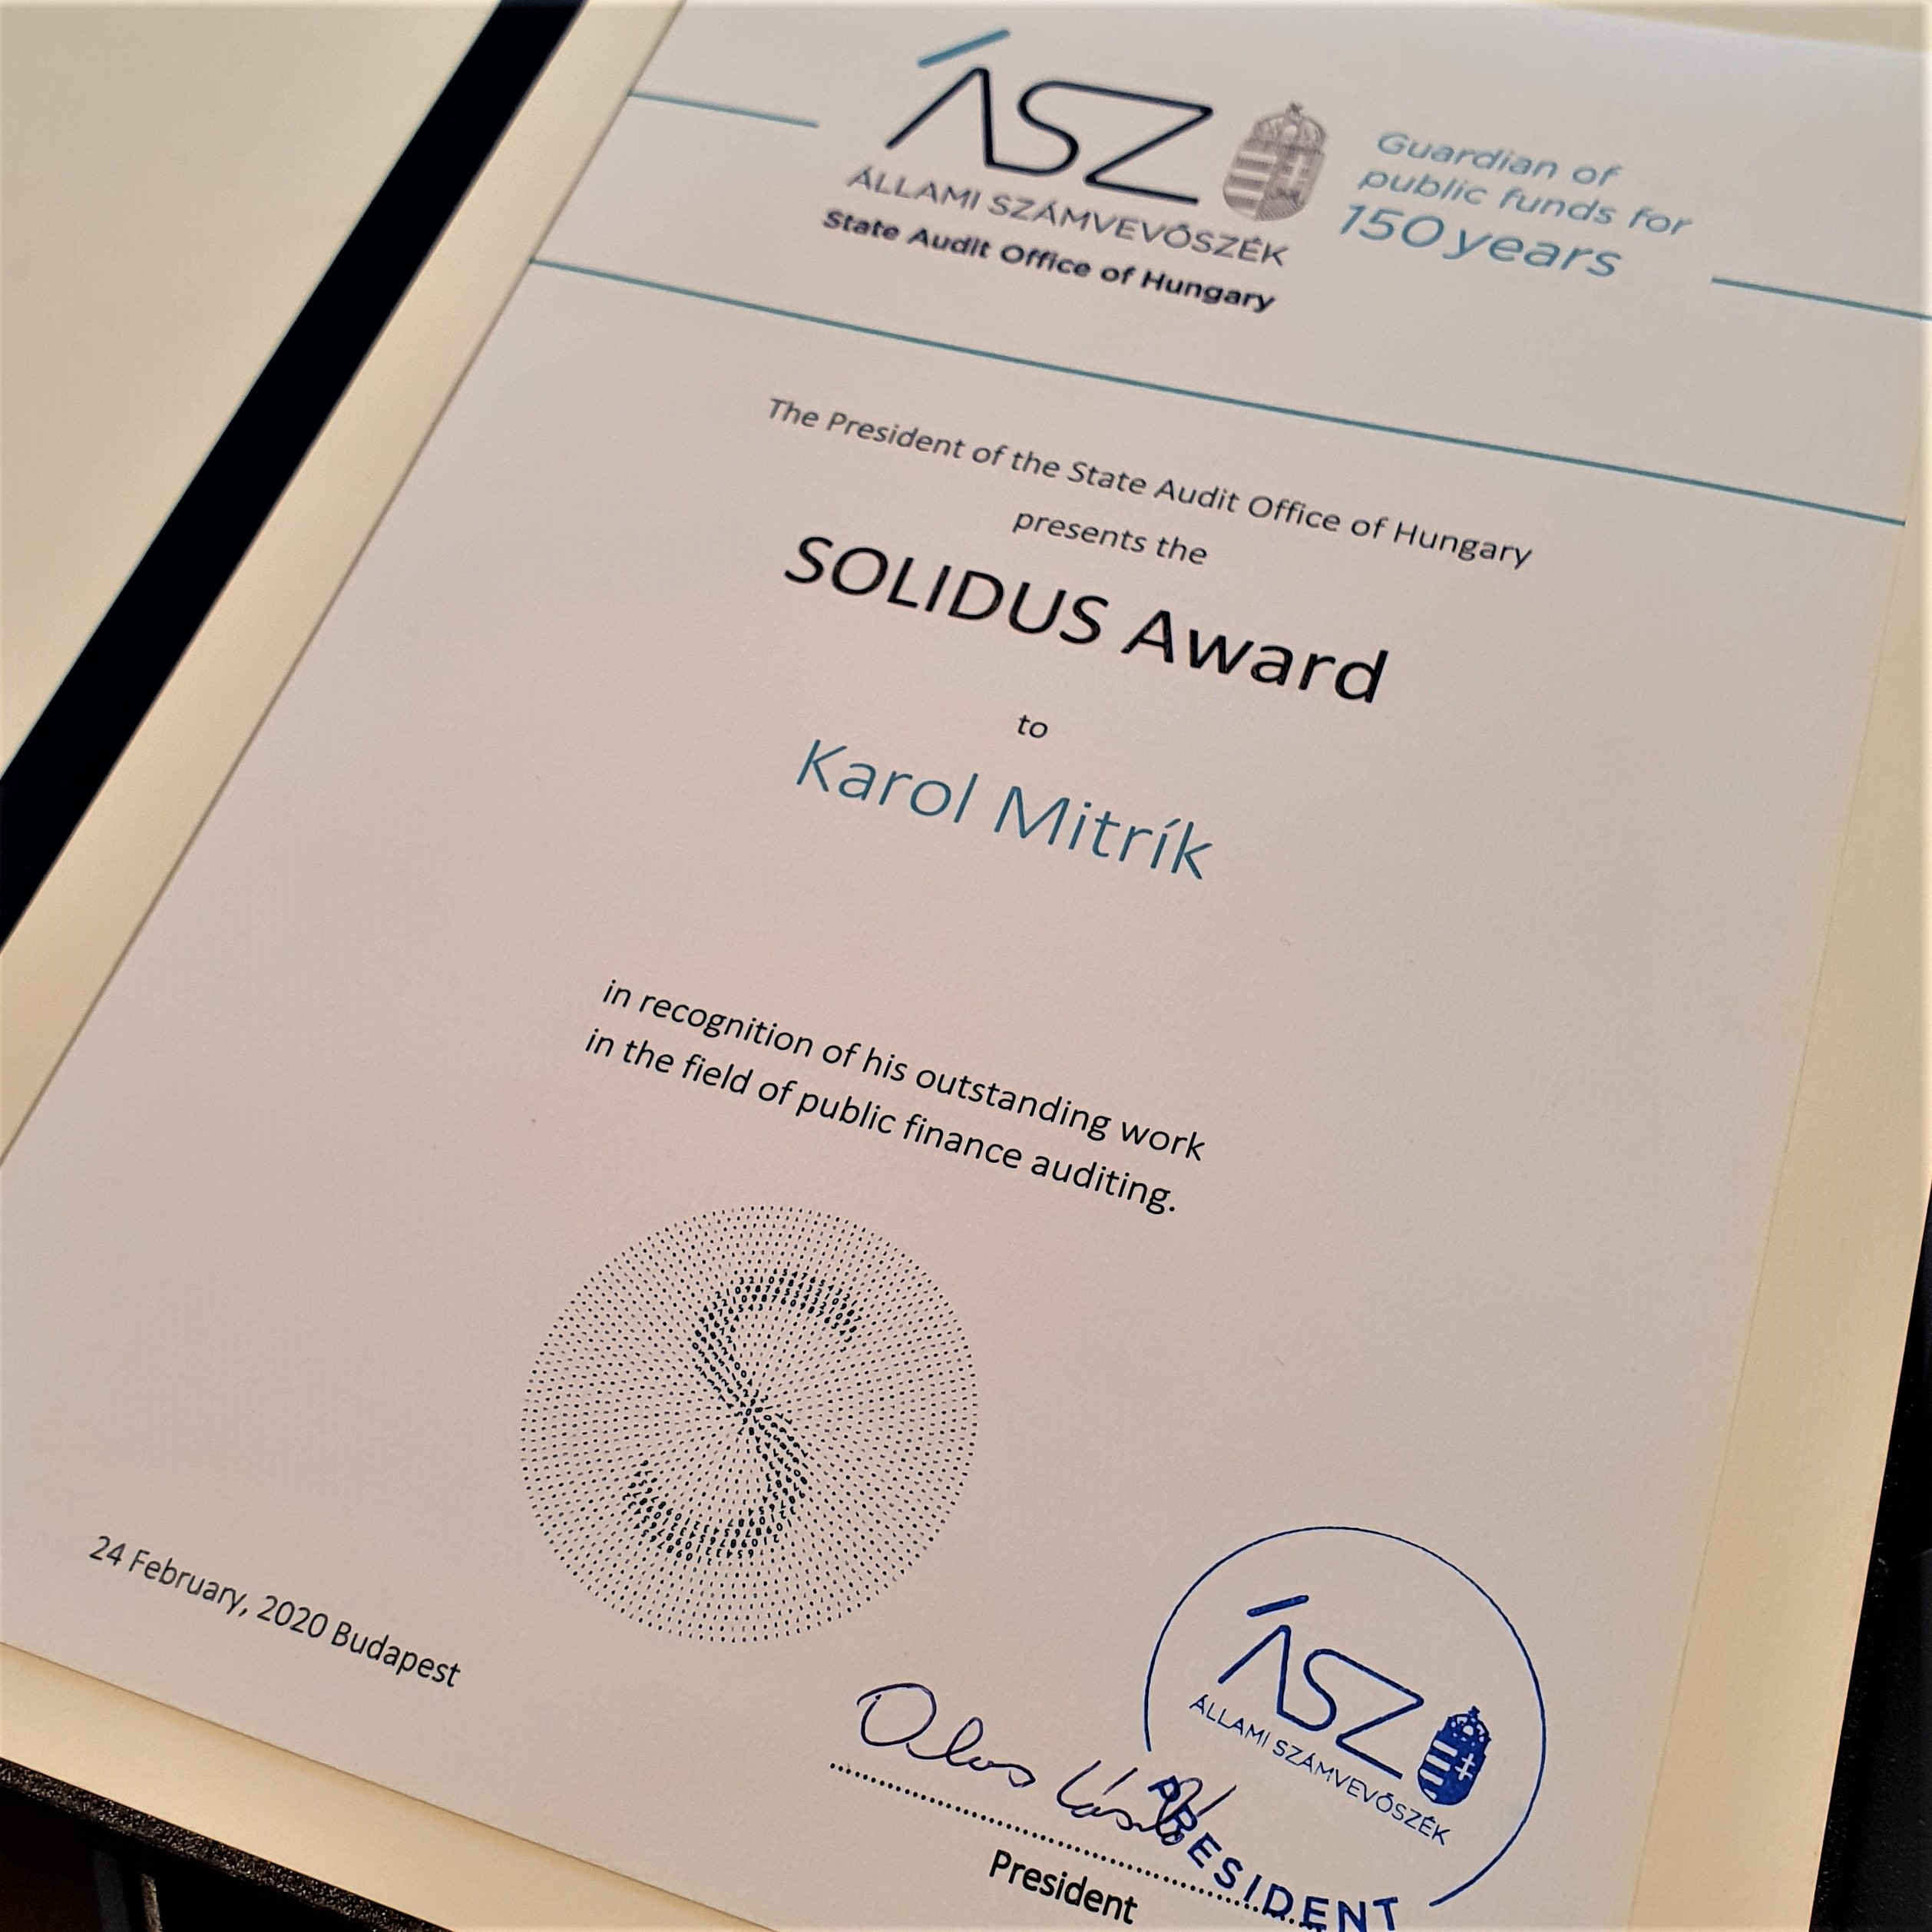 In the picture - Solidus award for Karol Mitrík, The President SAO SR JPG (1 MB)